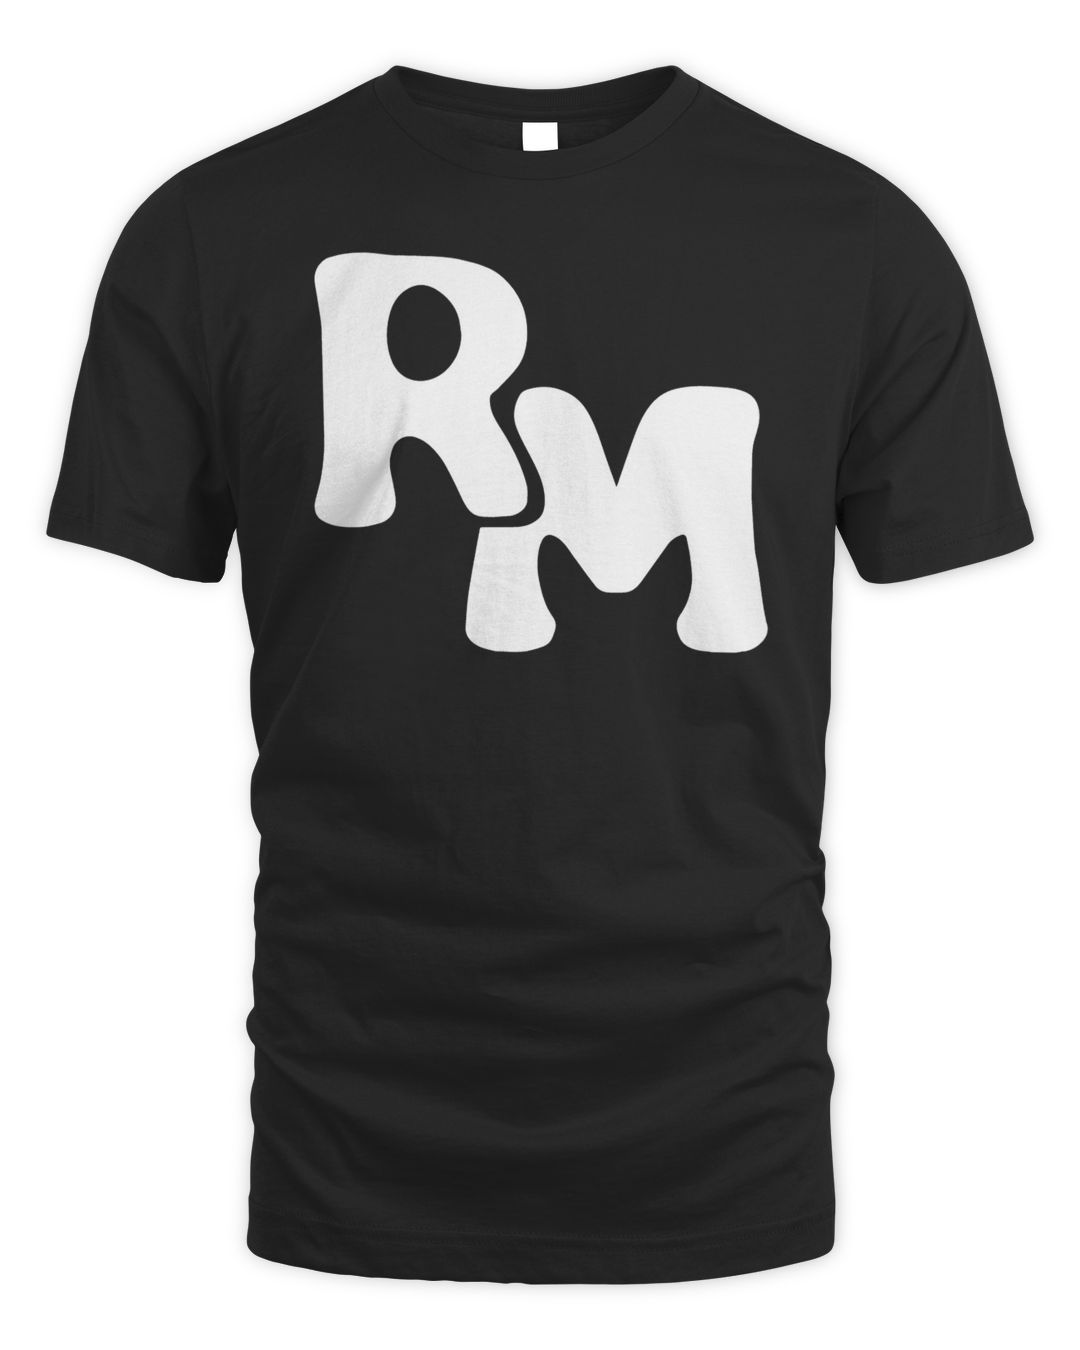 Role Model Merch Puff Rm Shirt aD0